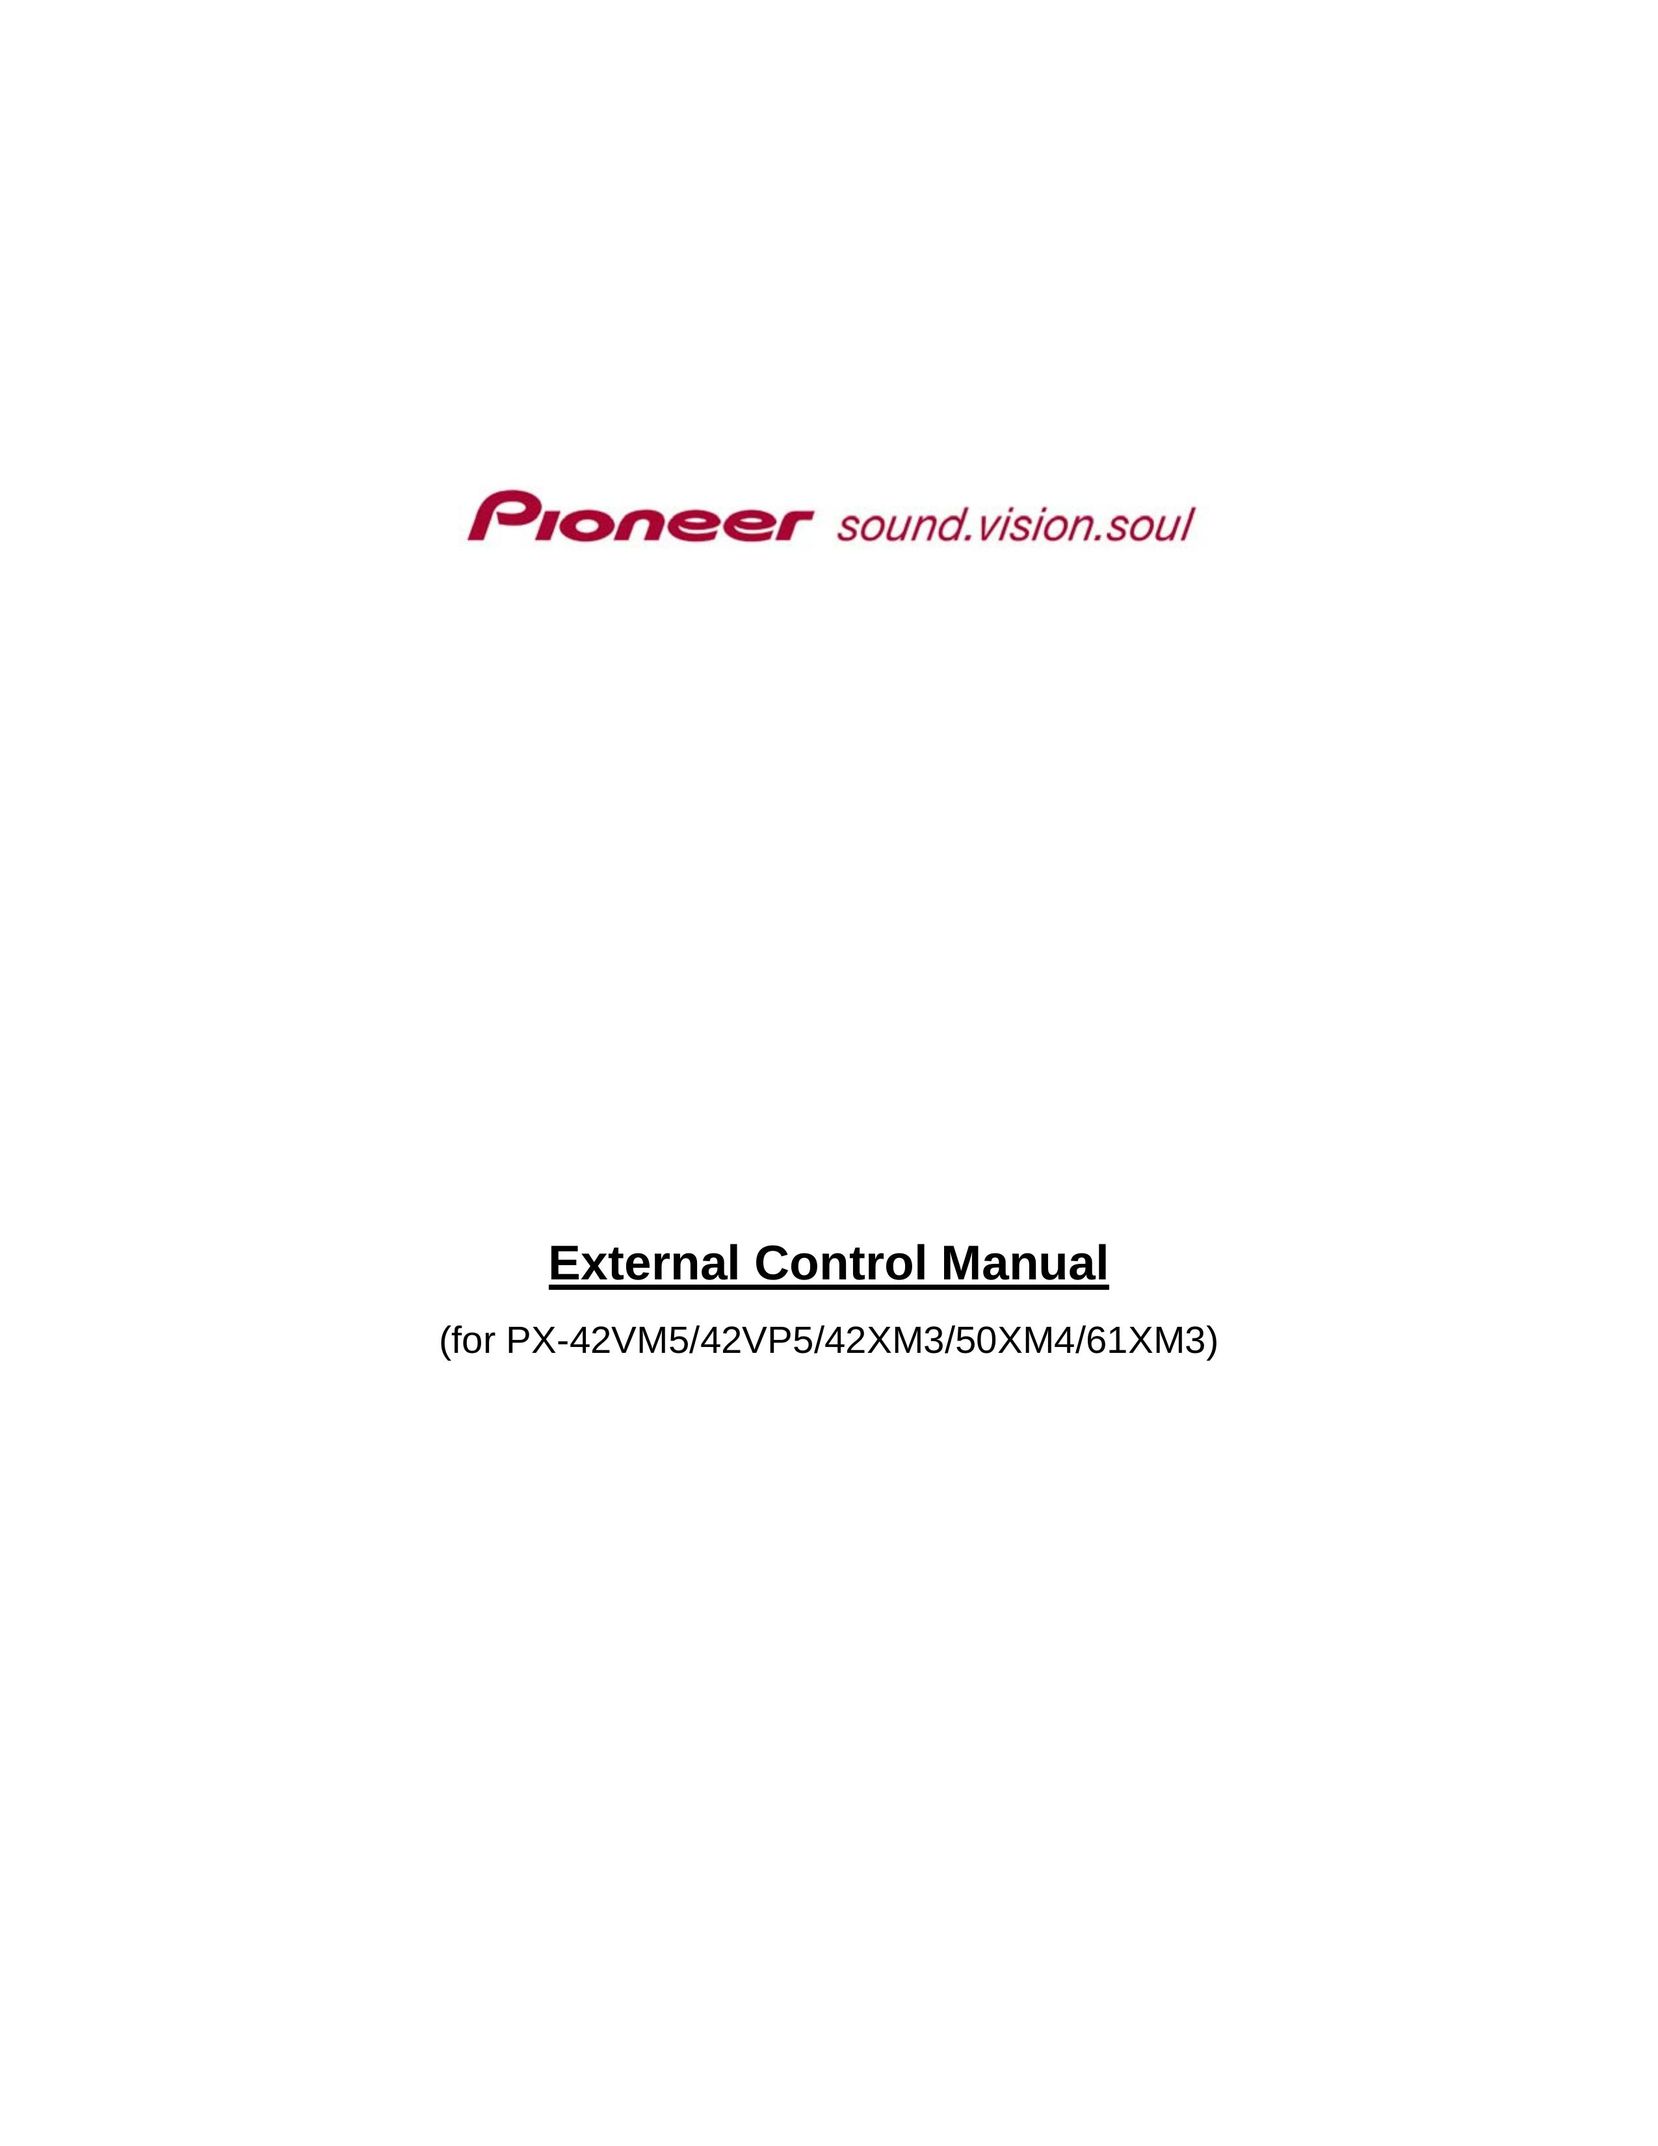 Pioneer PX-50XM4 Work Light User Manual